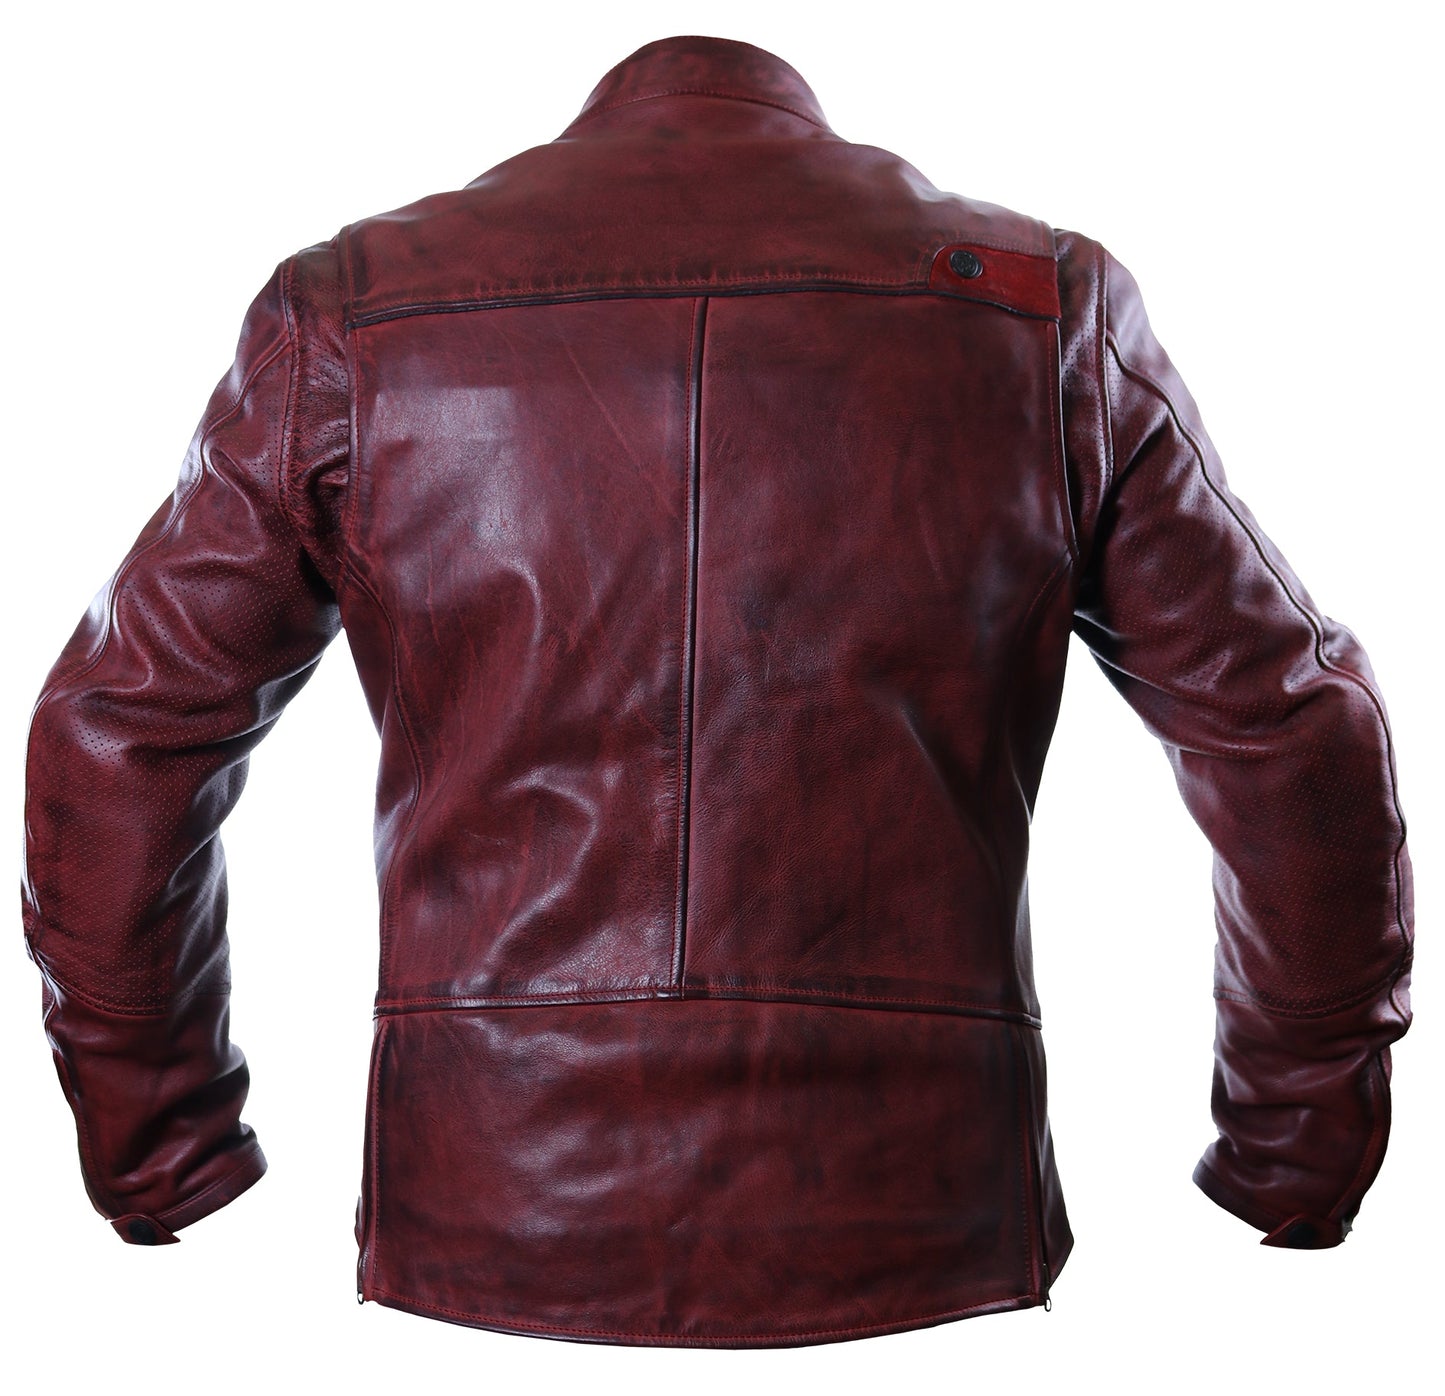 Madsen Leather Jacket - Oxblood